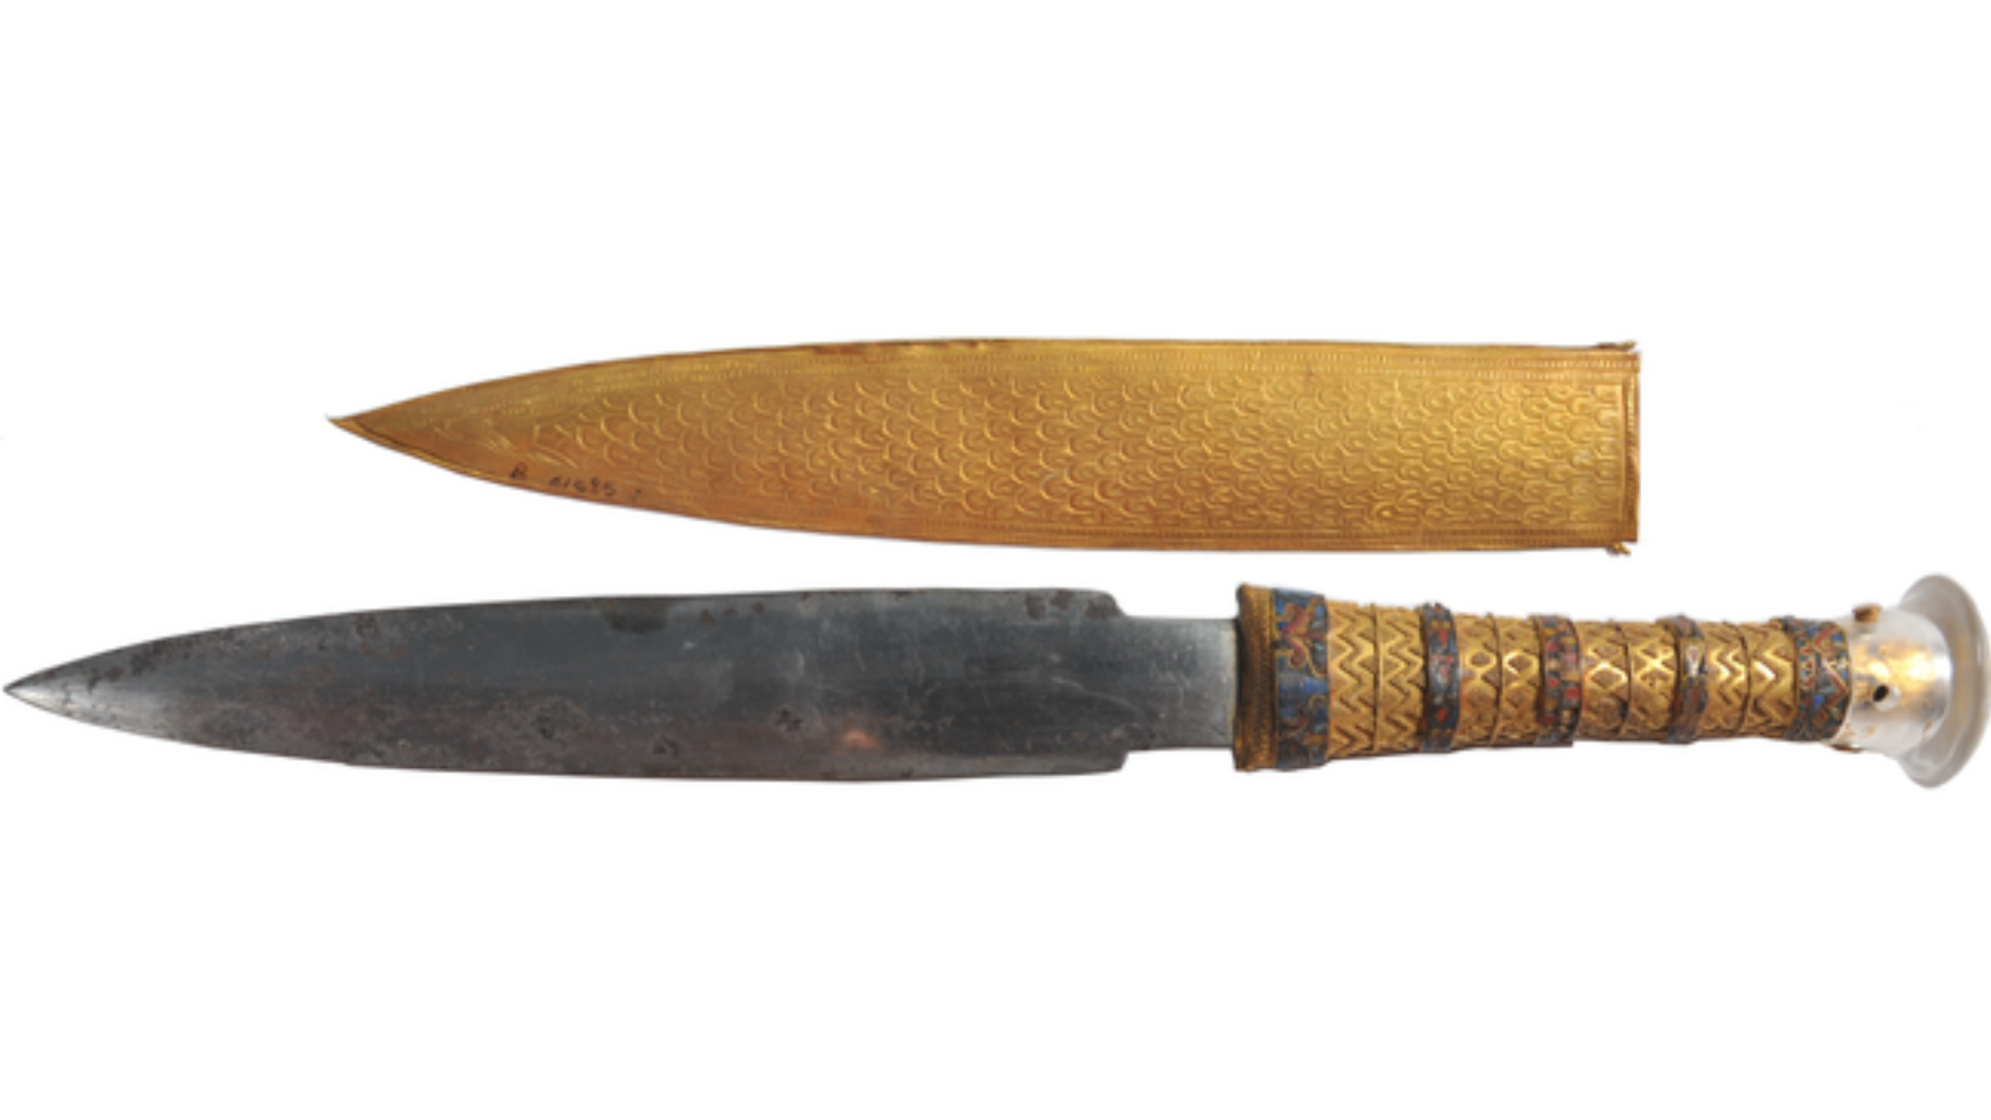 Tutankhamun's iron dagger blade and ornamental gold sheath